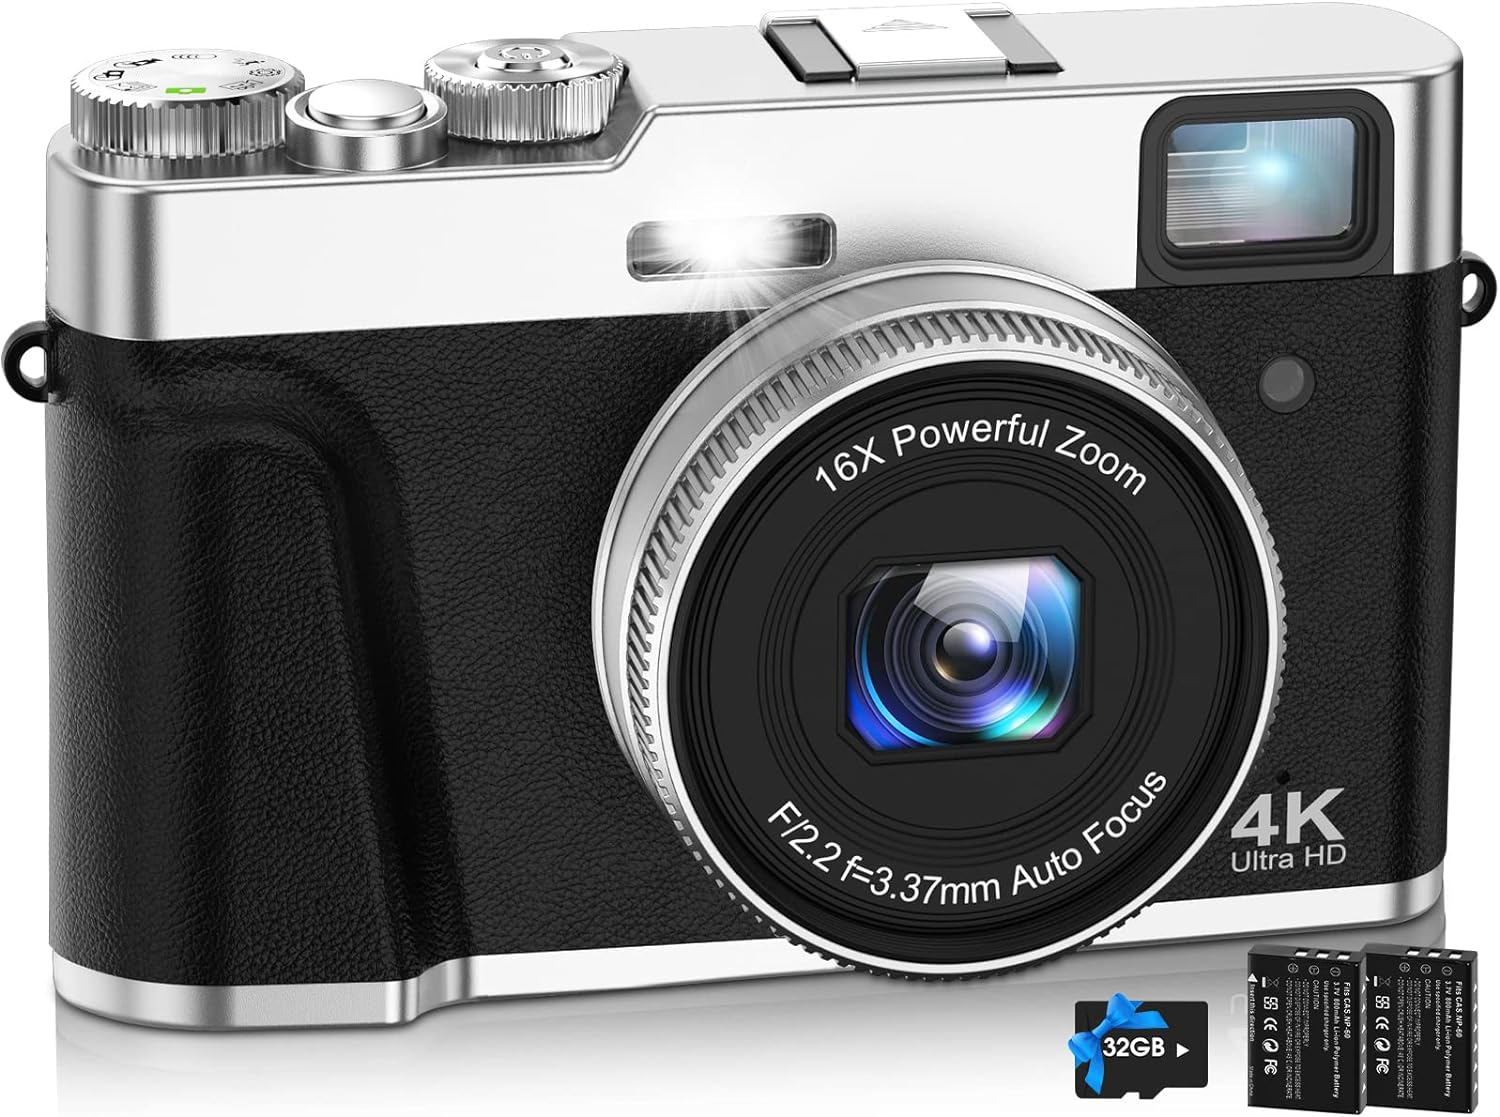 NEZINI 4K Digital Camera Review: Capture Stunning Photos and Videos